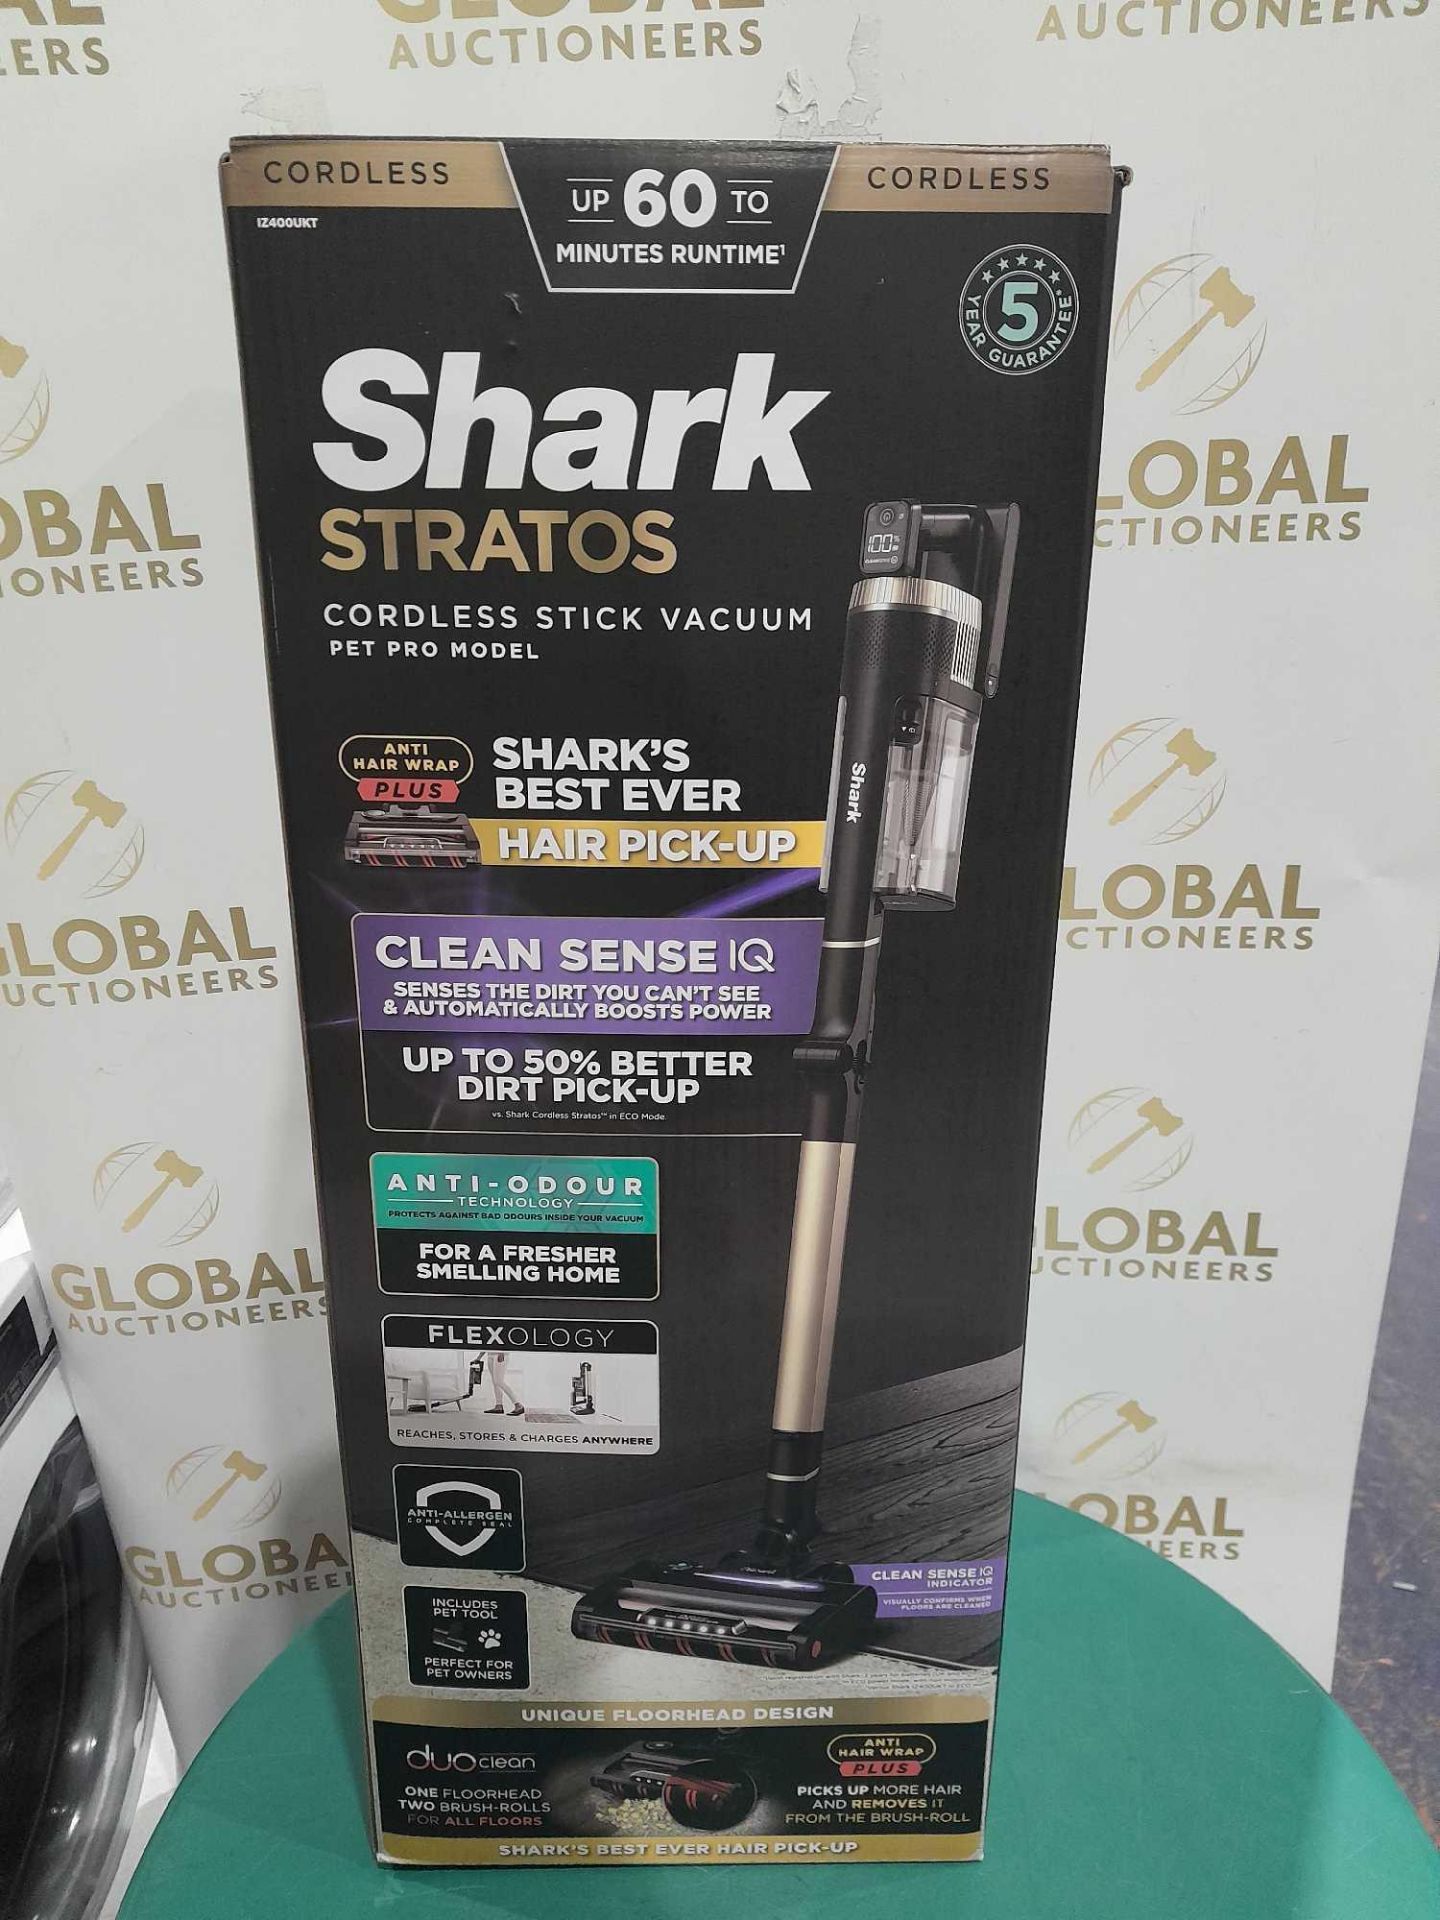 RRP £420 Shark Stratos Cordless Vacuum W/ Anti Hair Wrap & Clean Sense Iq Iz400Ukt - Image 2 of 2